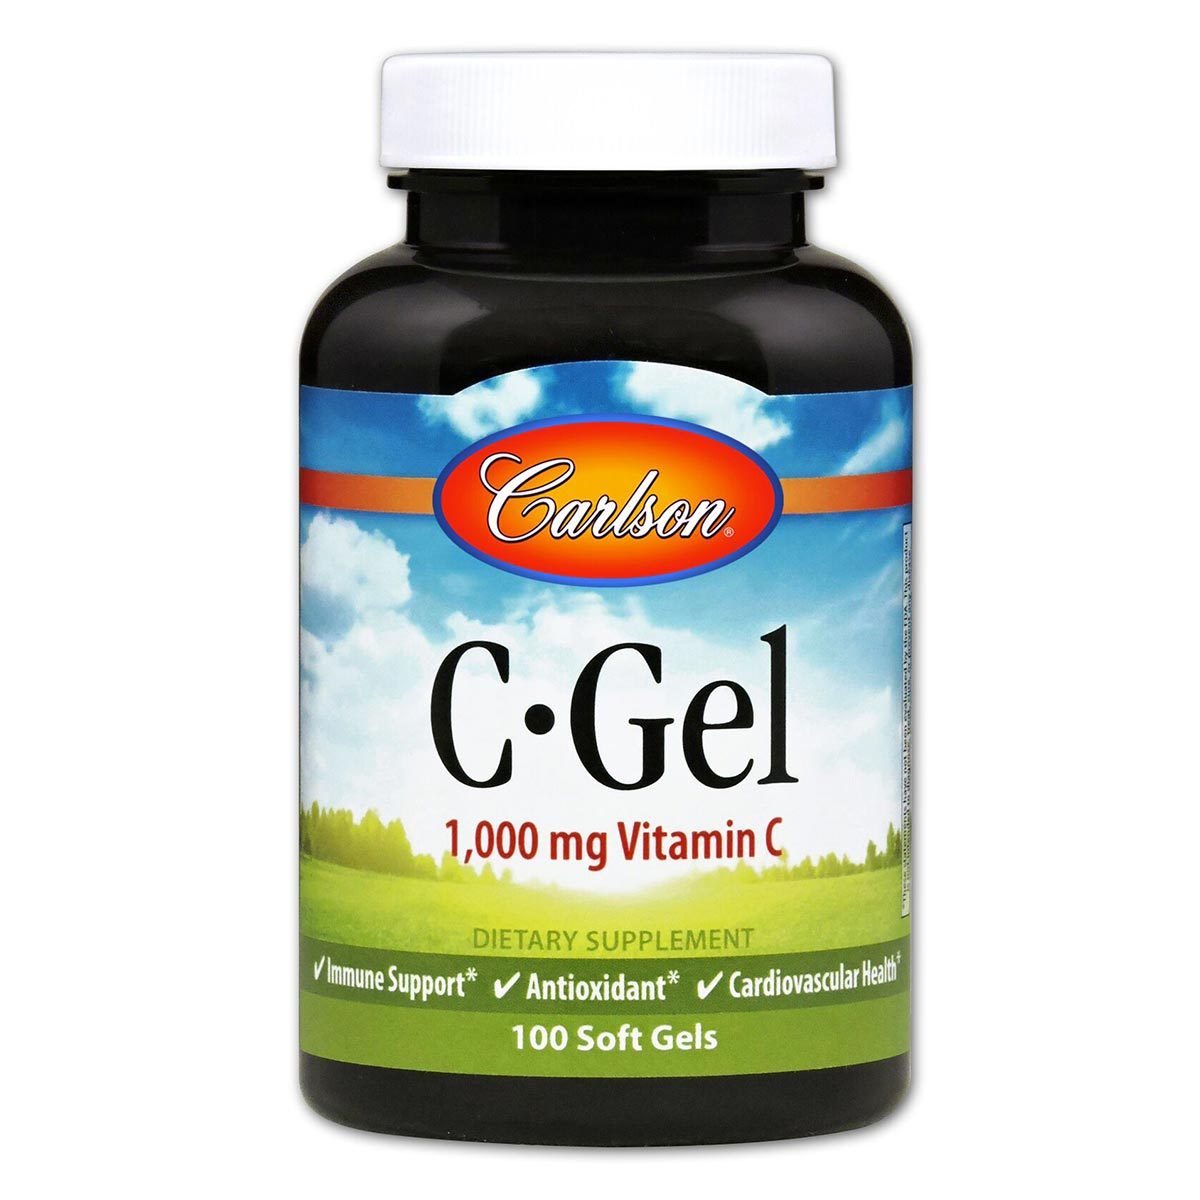 Primary image of C-Gel